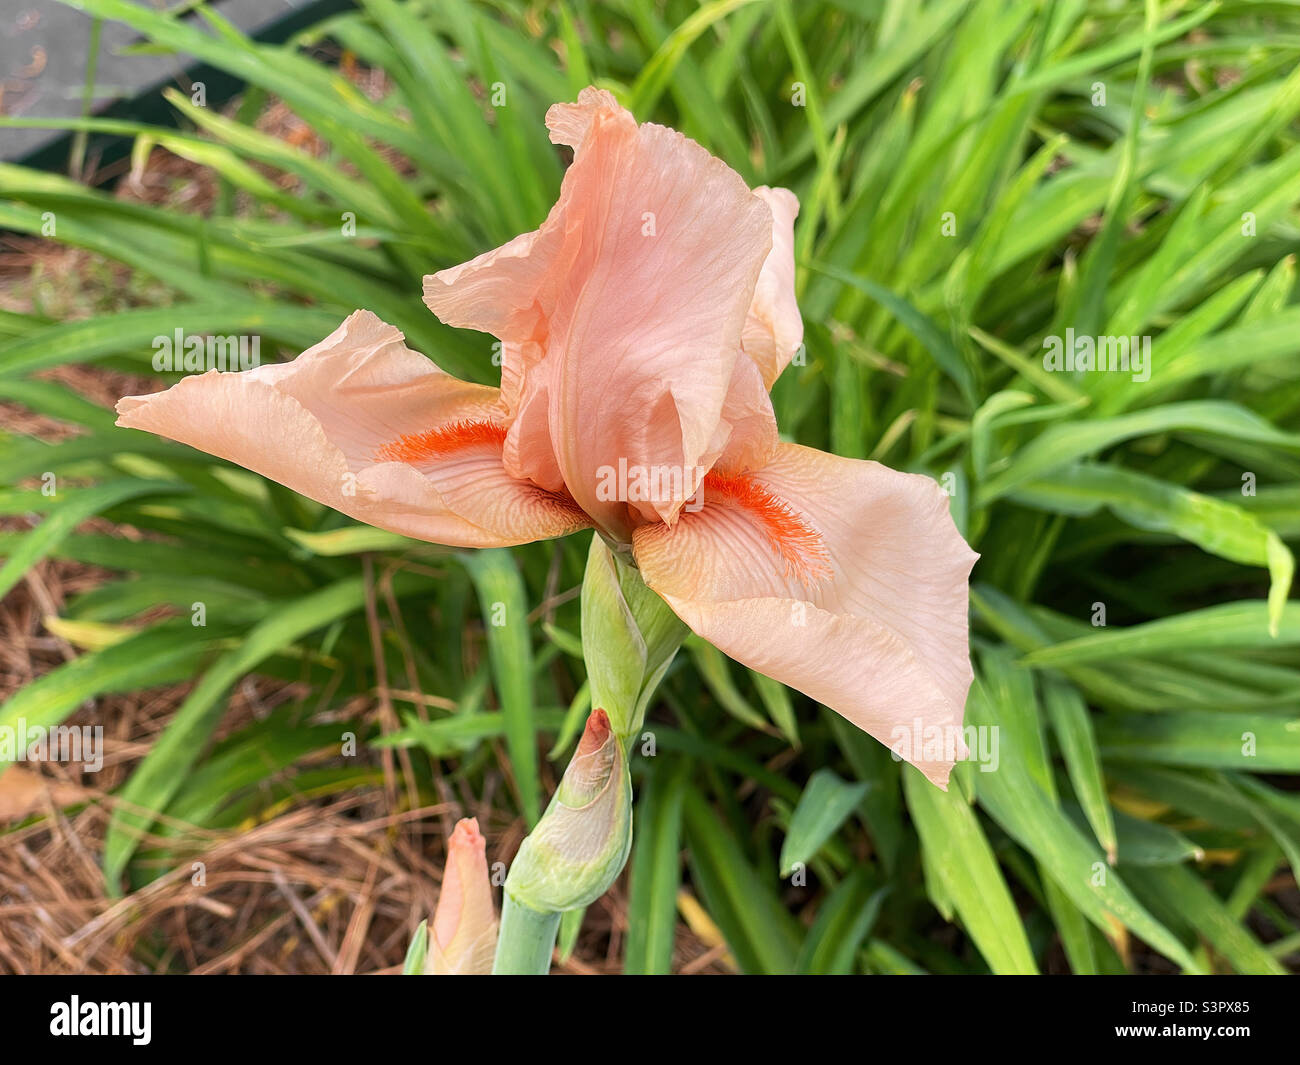 Peach colored bearded Iris flower blossom in a backyard garden. Stock Photo